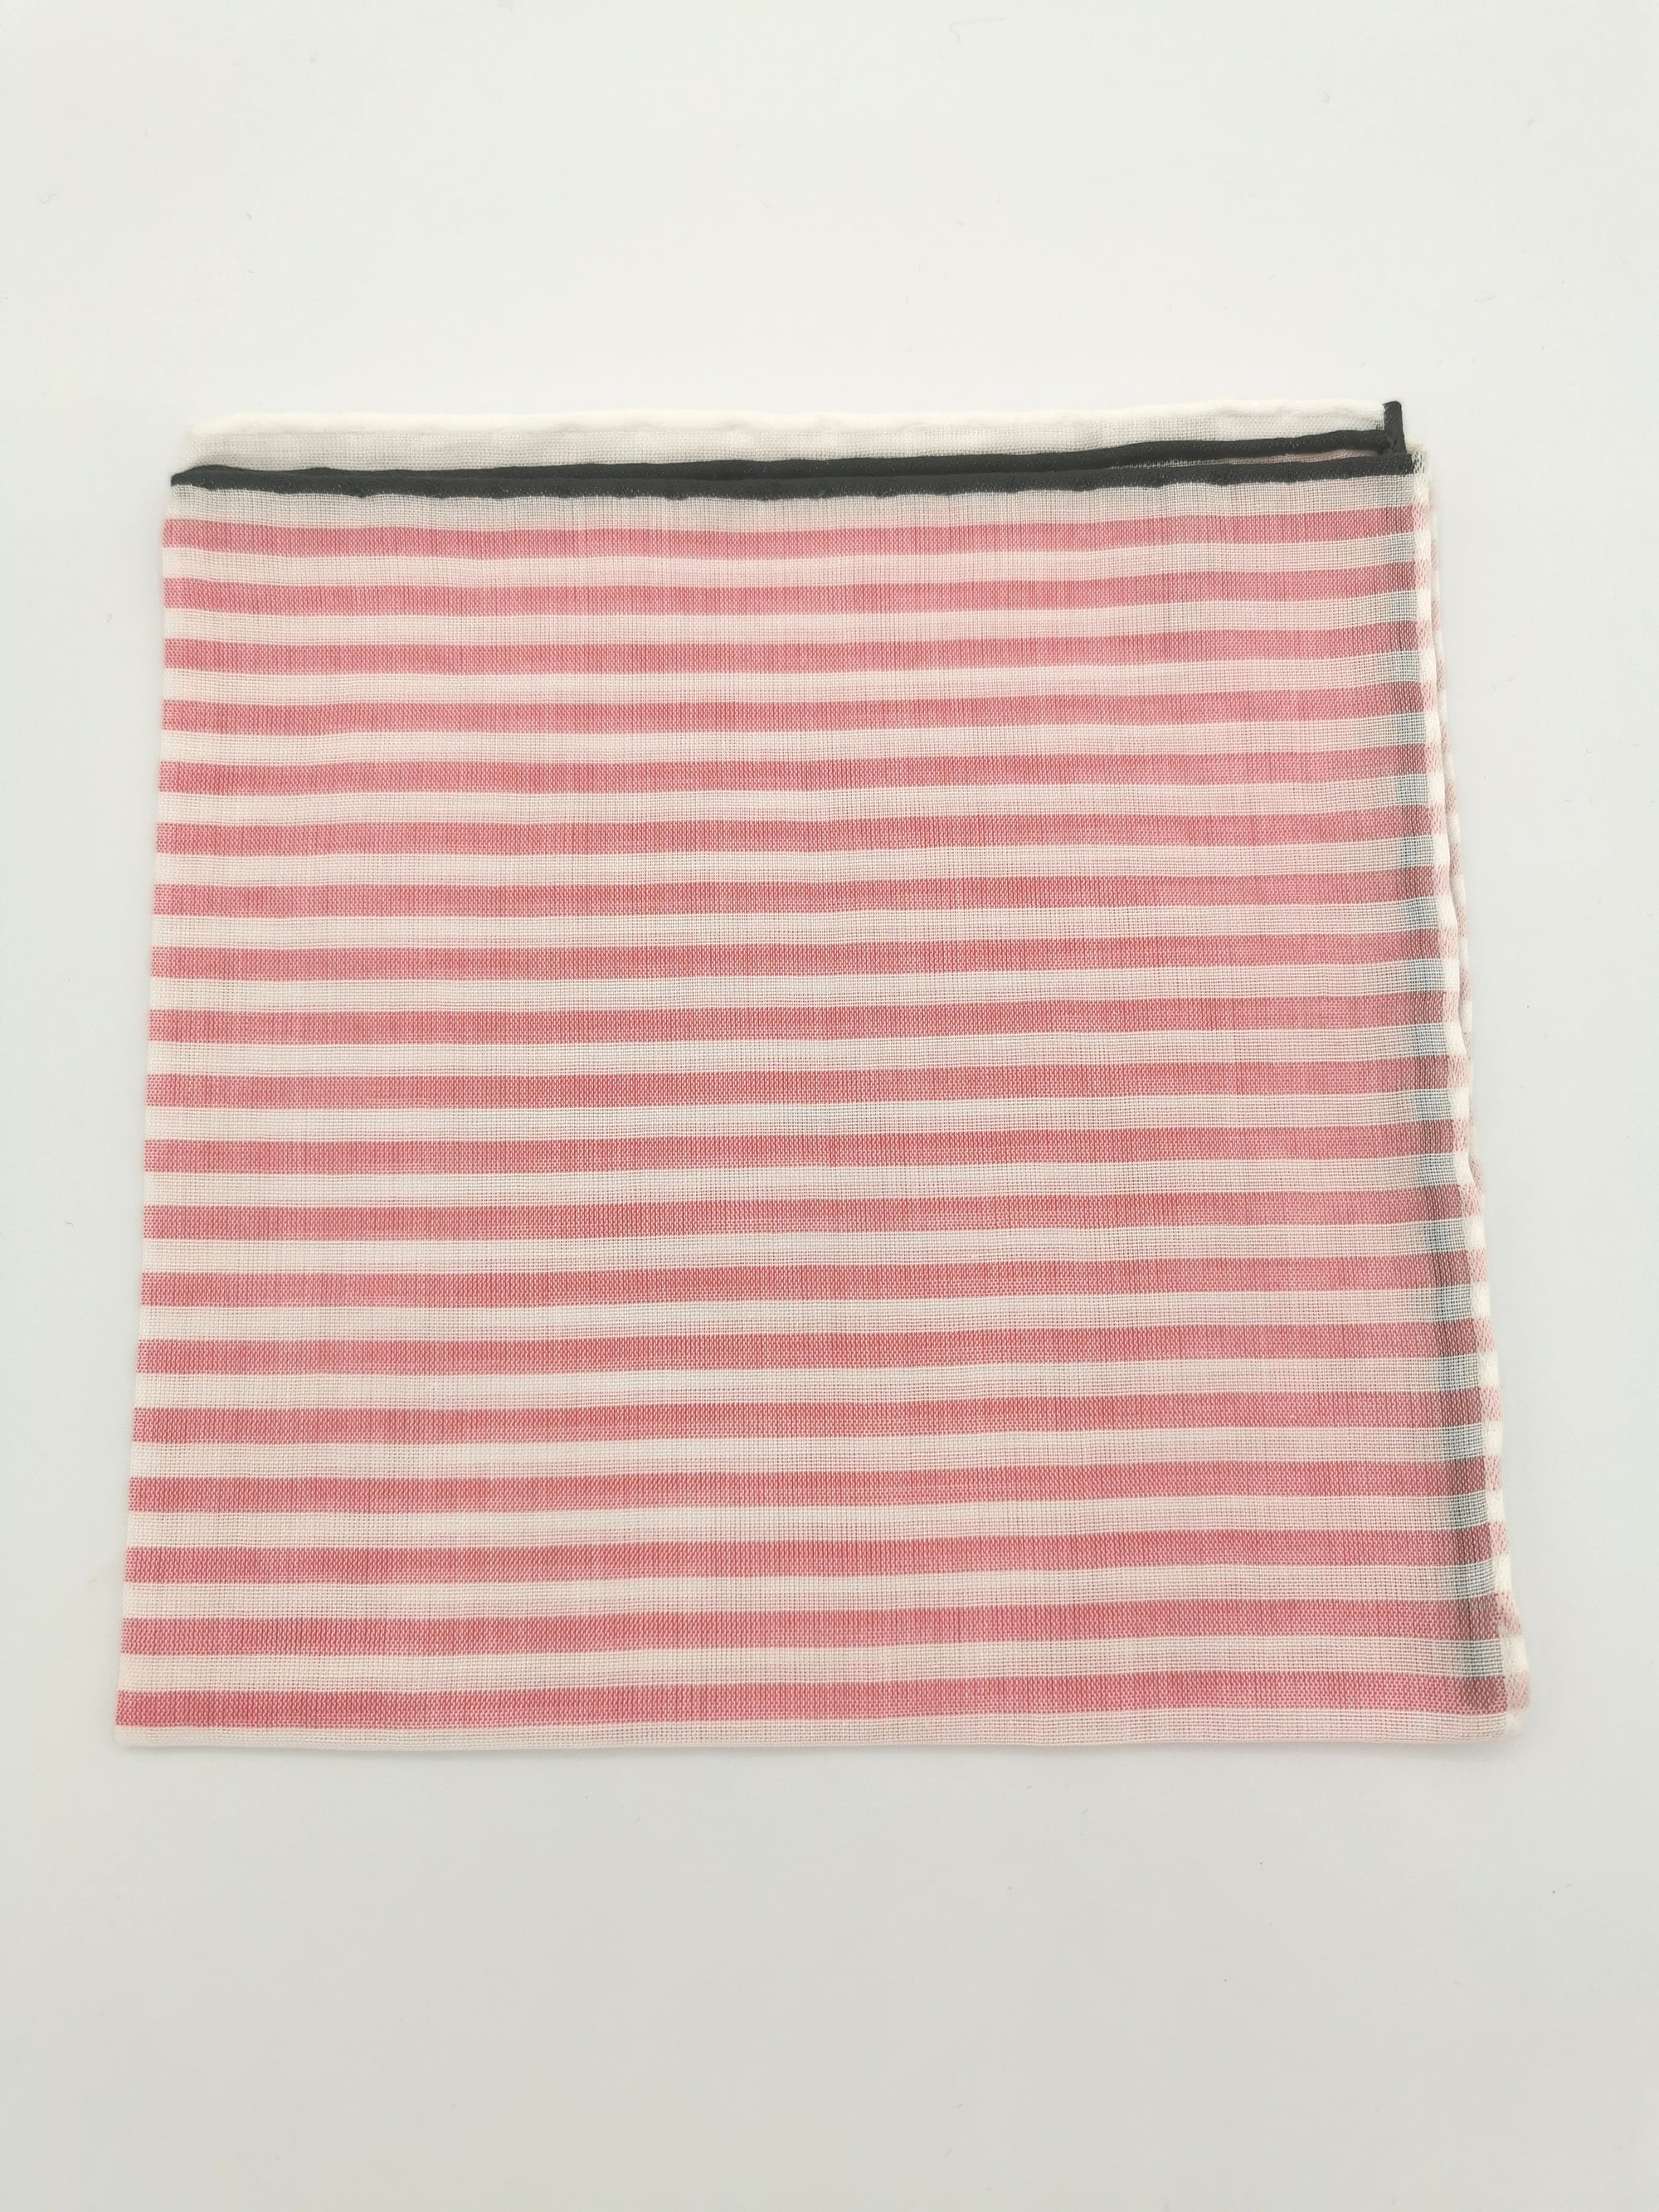 Simonnot-Godard pocket square with thin stripes